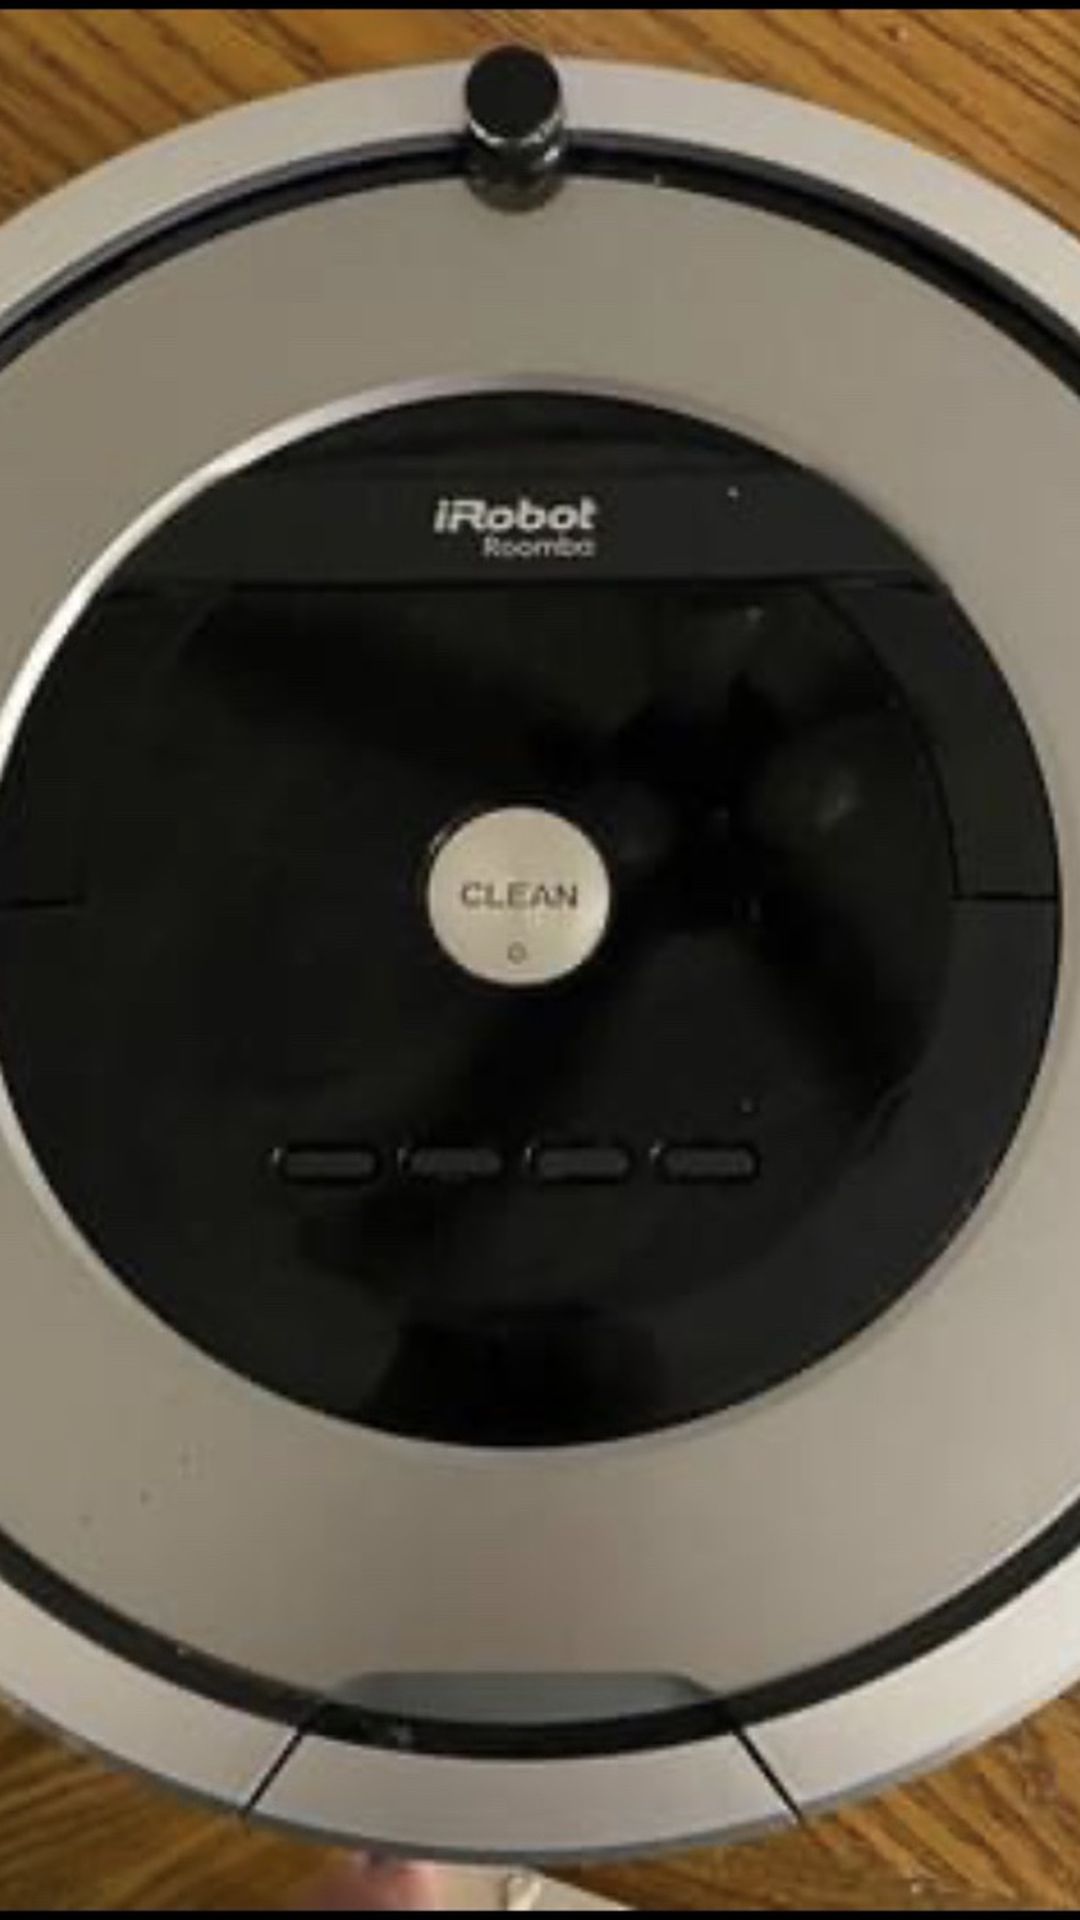 IRobot Roomba 860 (No dock)